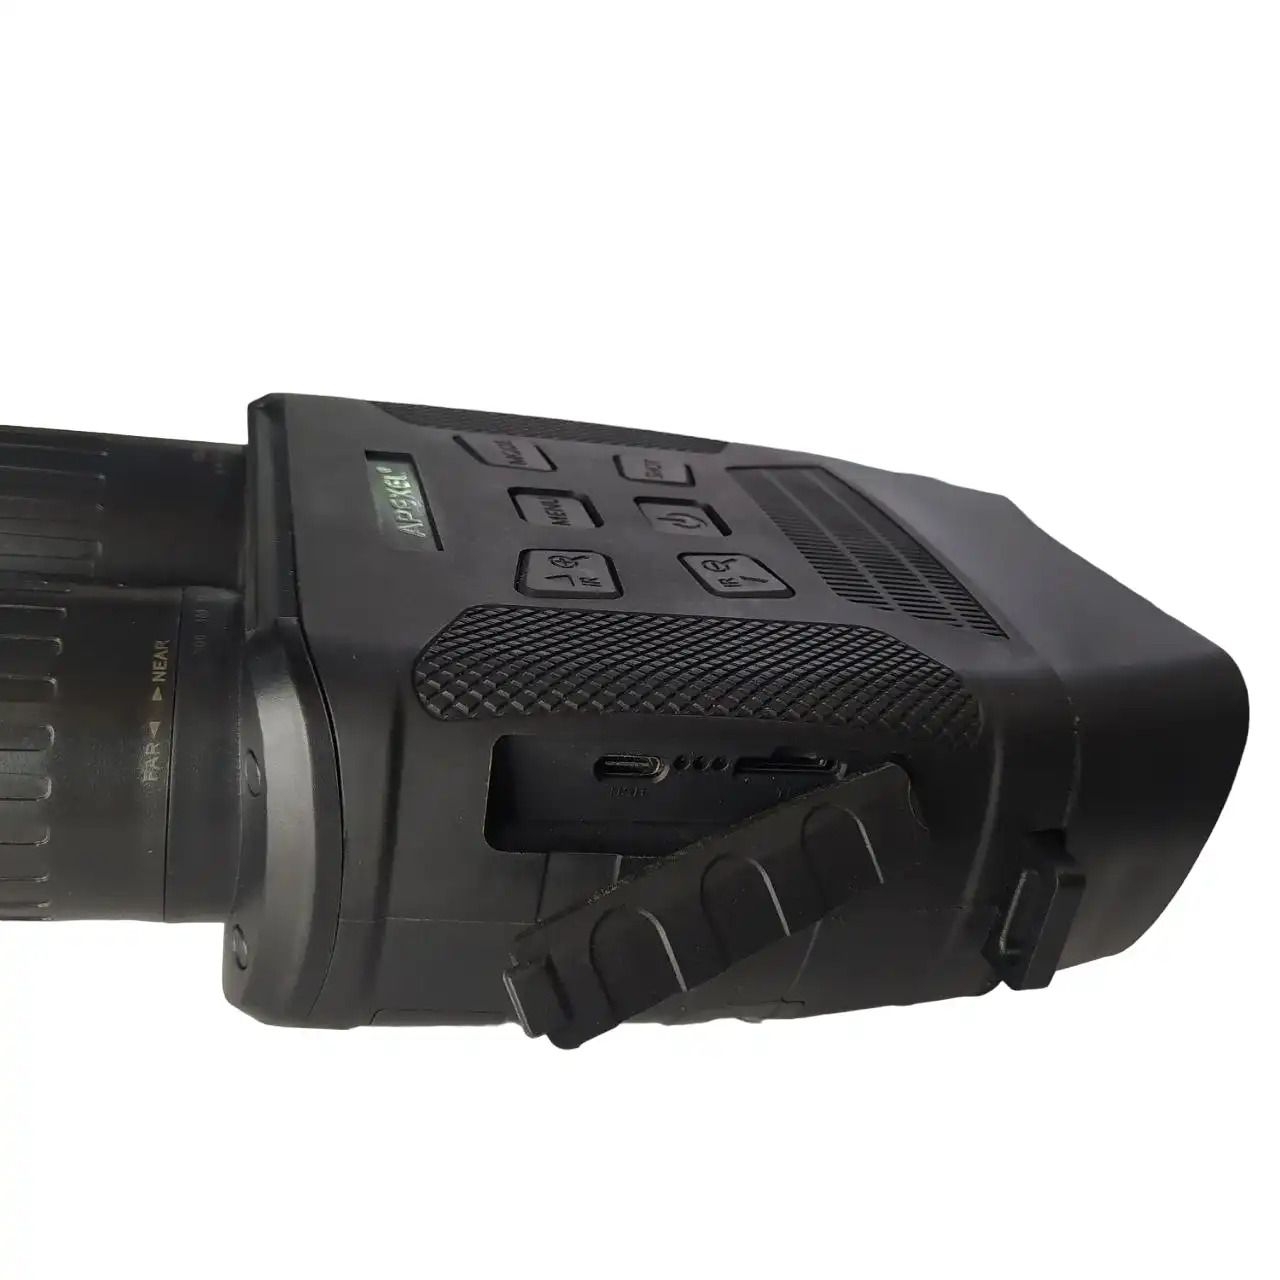 دوربین دوچشمی اپیکسل مدل HR-YSY0C -  - 4